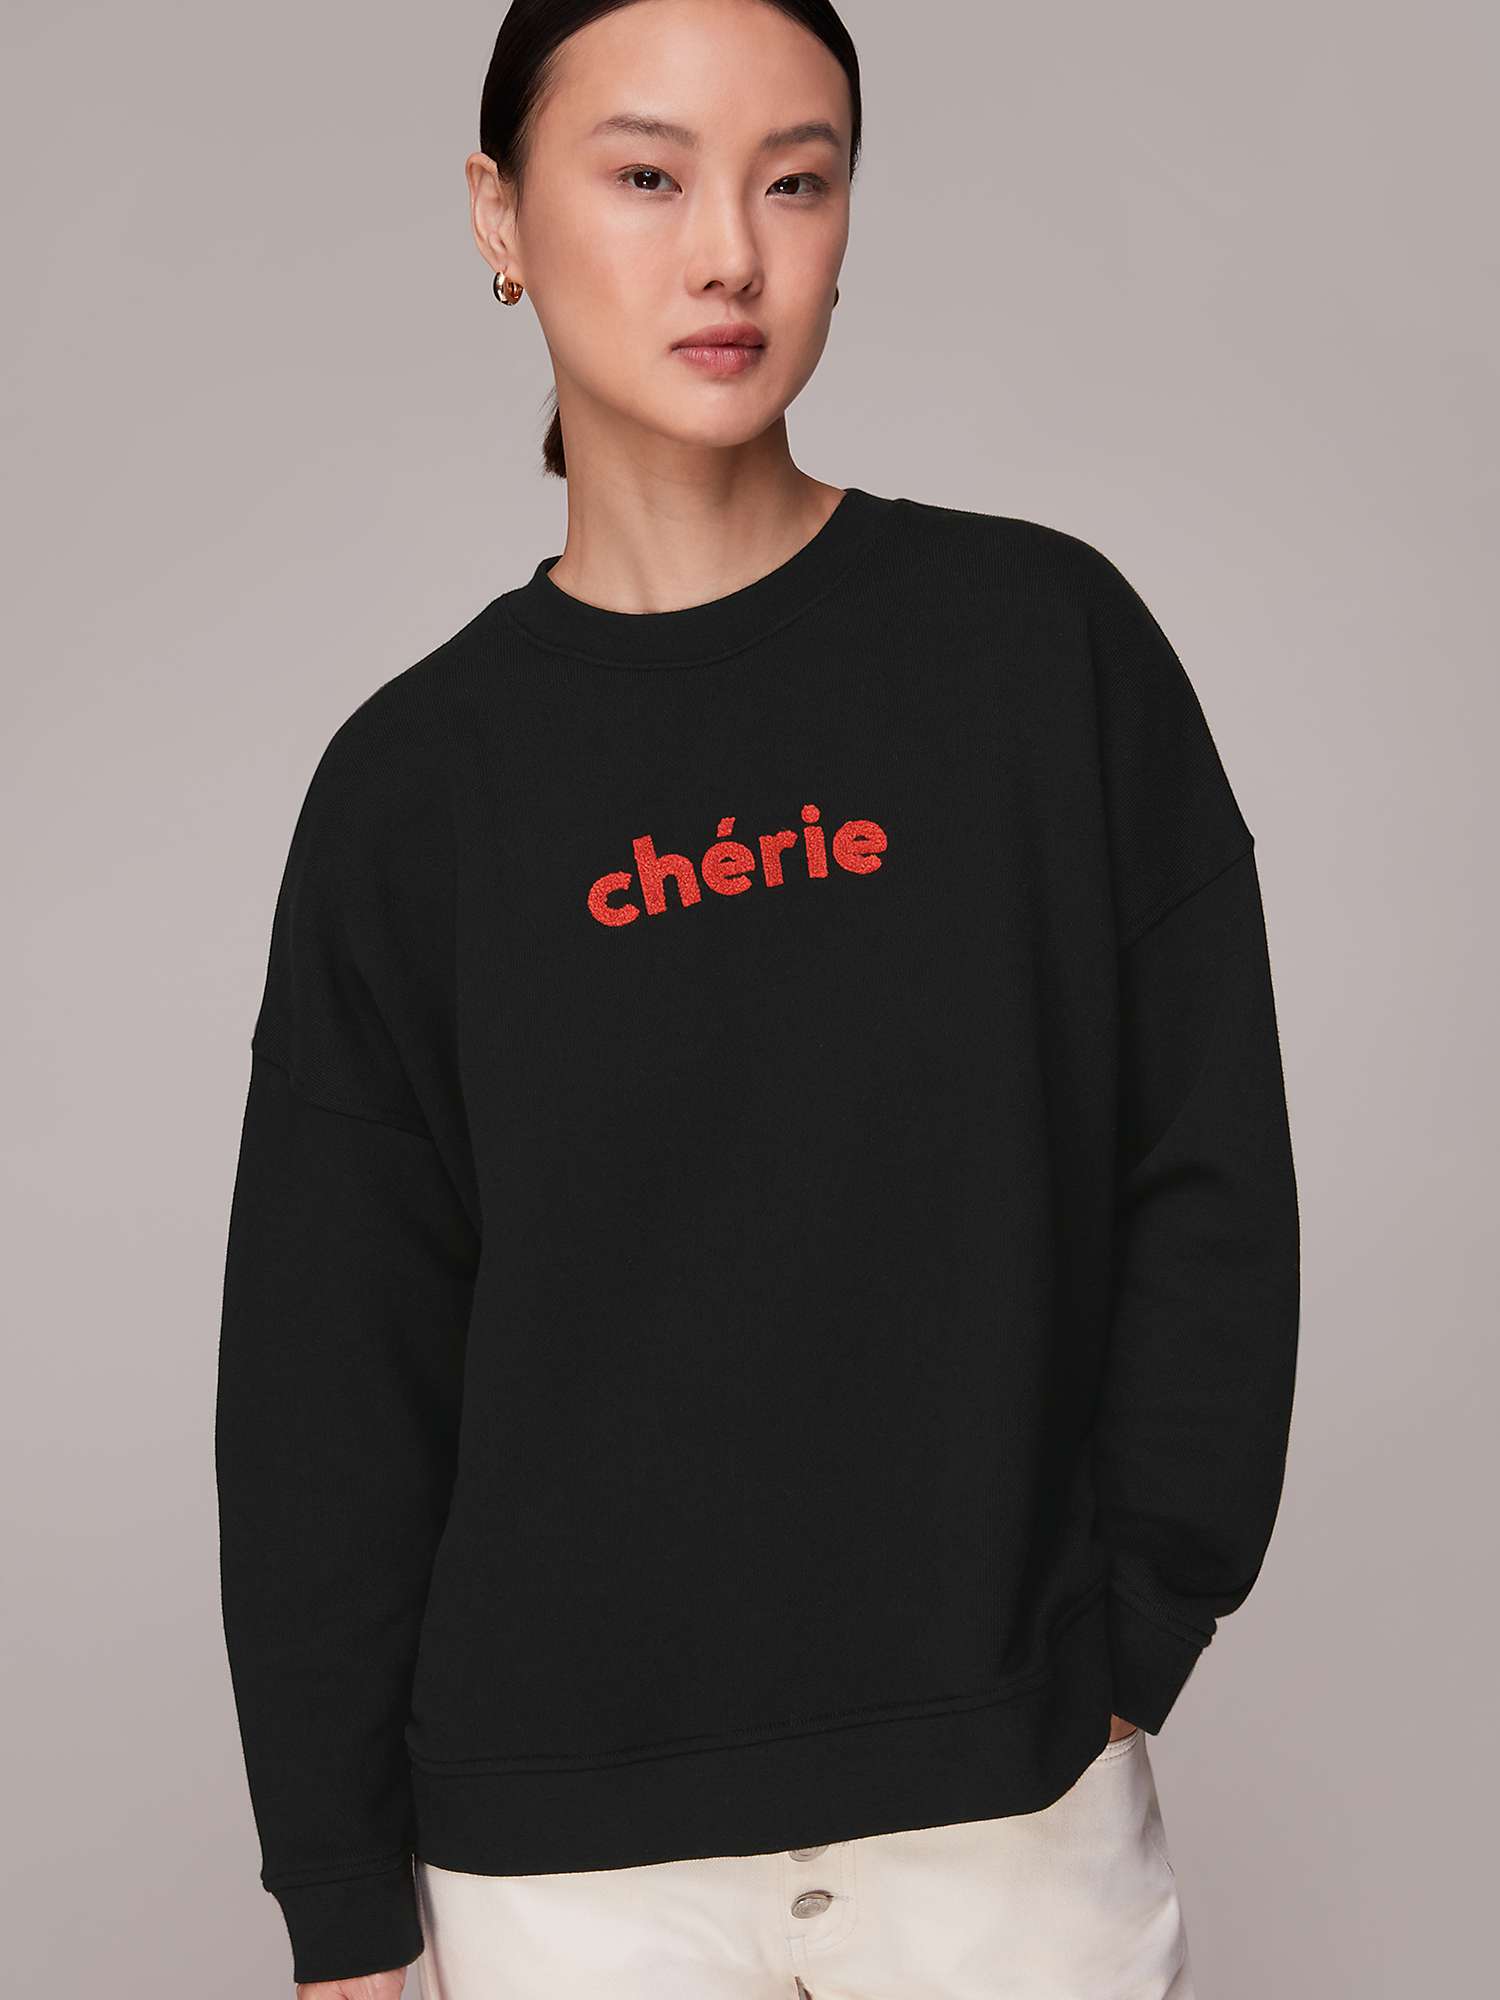 Buy Whistles Cherie Logo Sweatshirt, Black Online at johnlewis.com